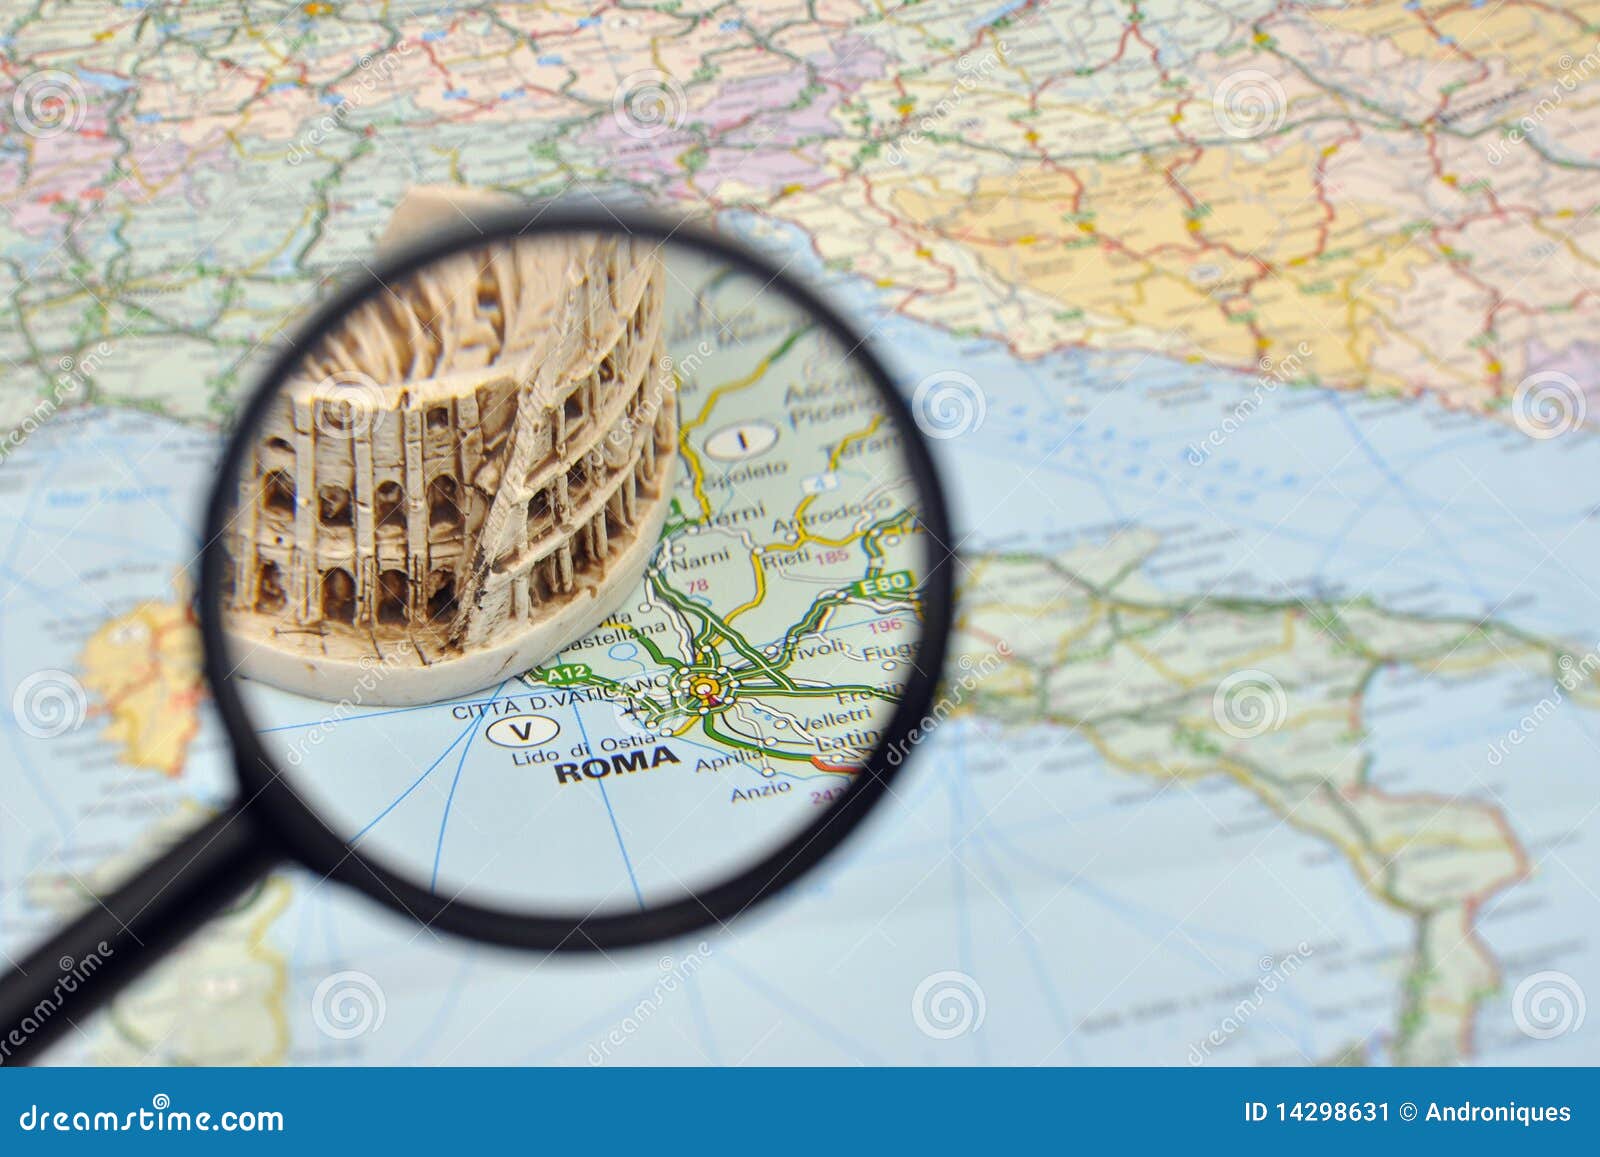 rome on italy map - miniature souvenir colosseum